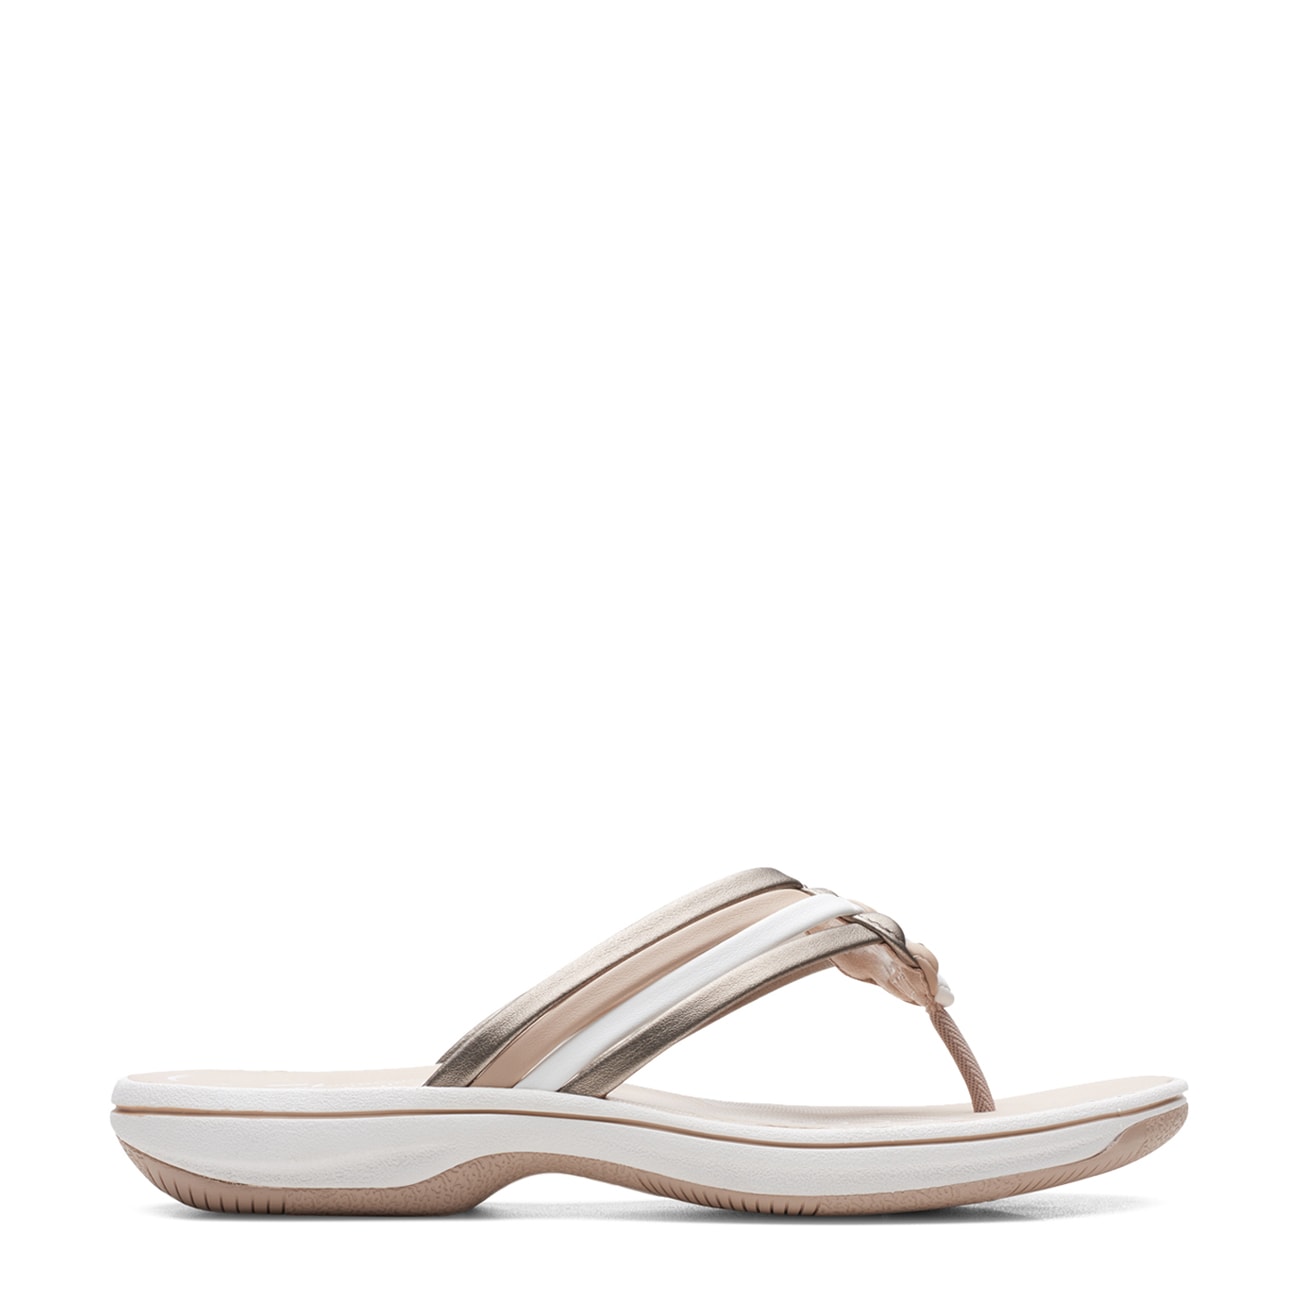 Clarks Women's Breeze Coral Sandal | The Shoe Company